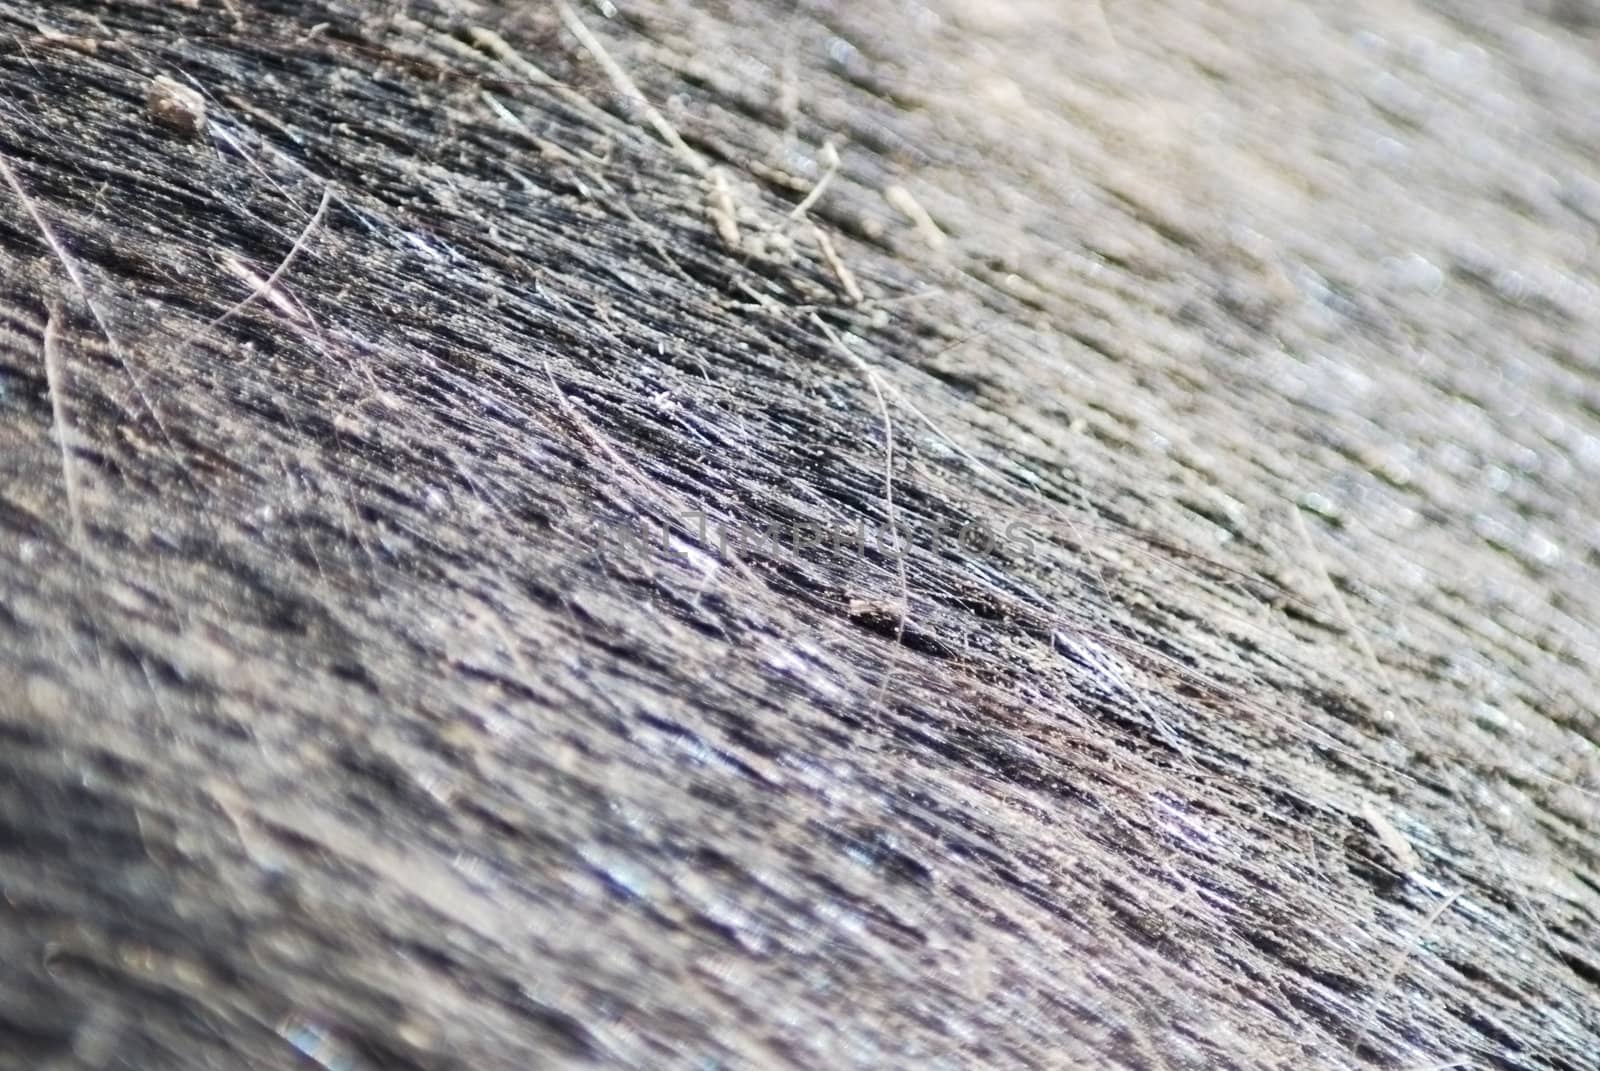 black horse skin and fur close up, nature texture  